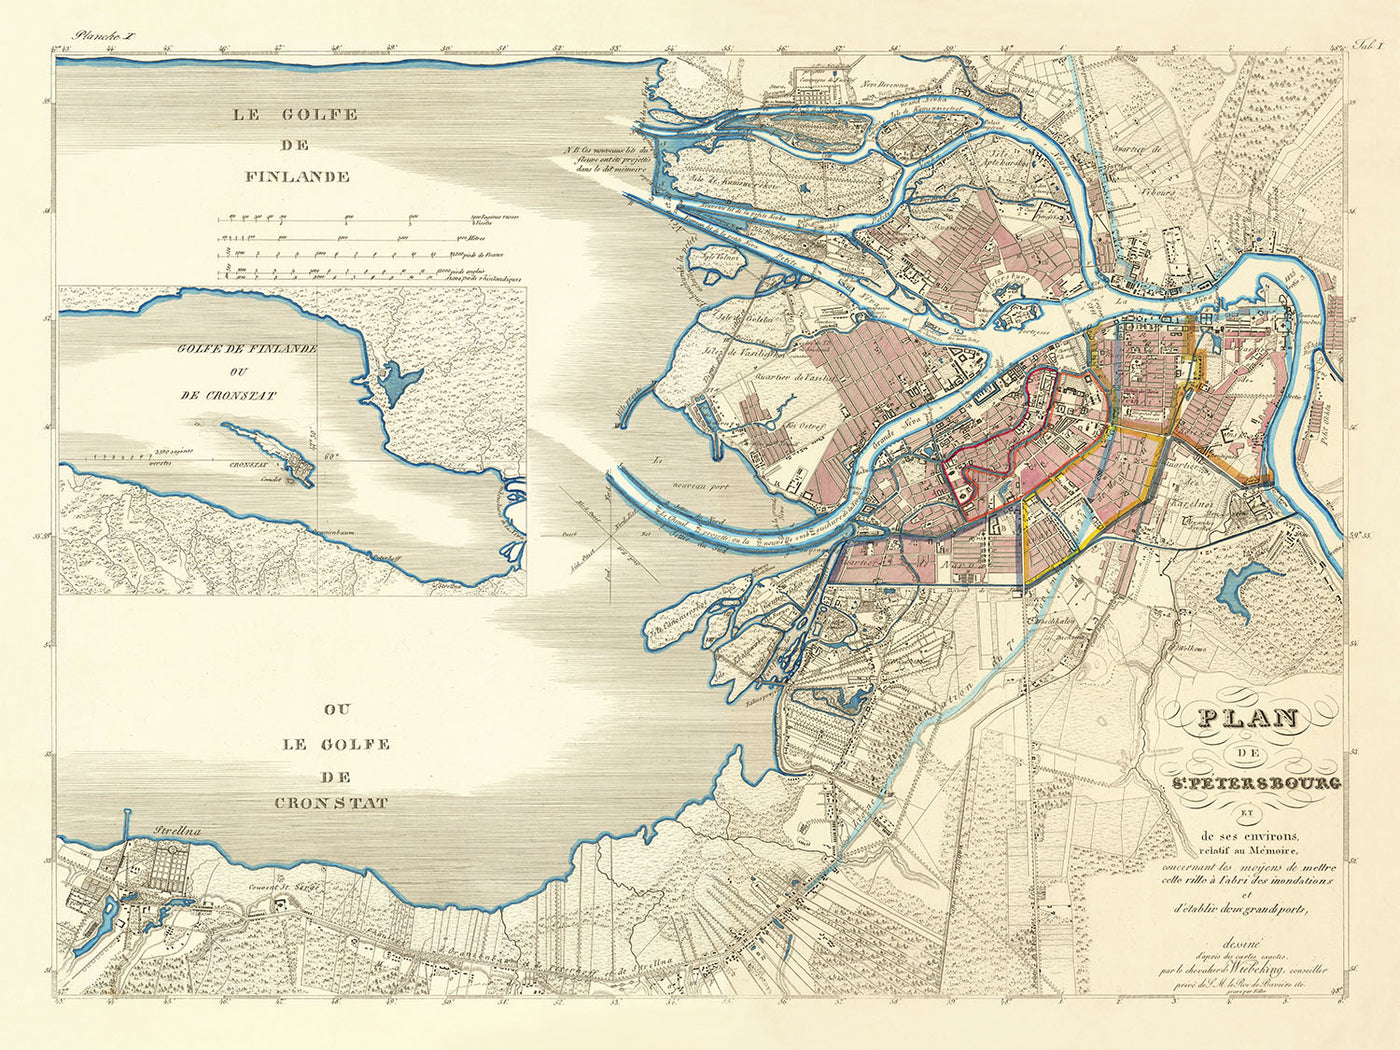 Old Map of Saint Petersburg by Wiebeking, 1840: Nevsky Prospect, Vasilievsky, Fontanka River, Embankment, 1824 Flooding